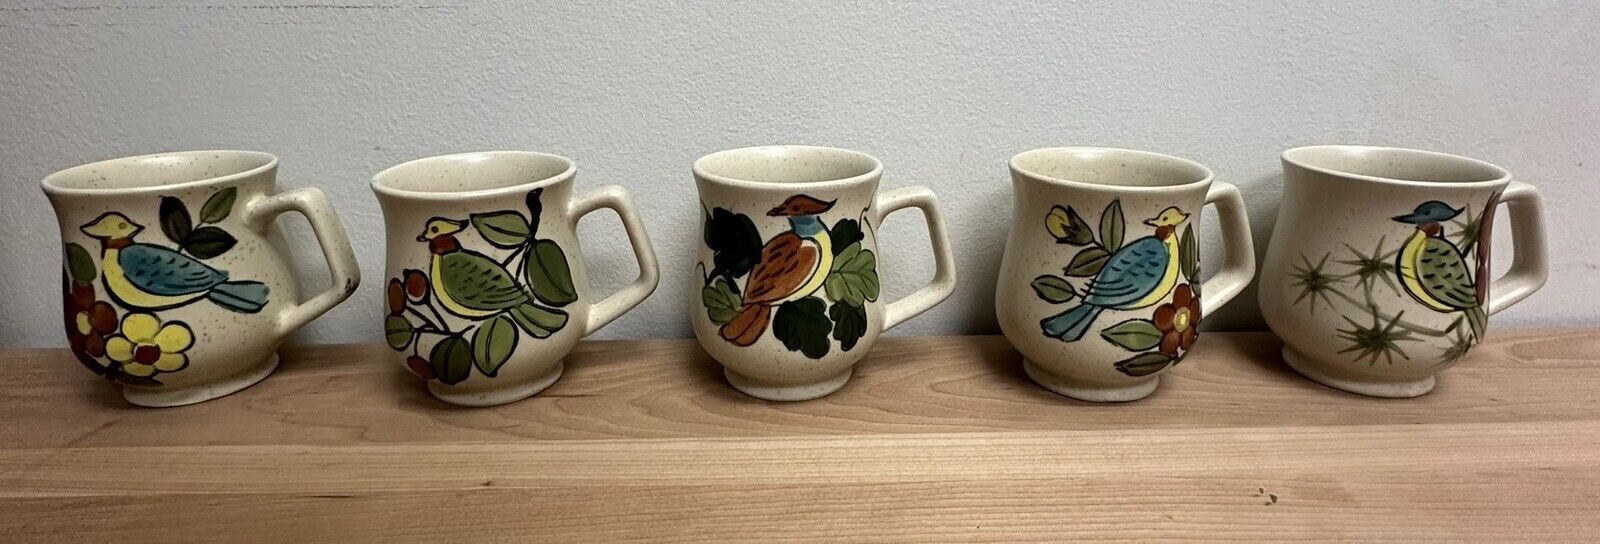 Set 5 Vintage Otagari Coffee Mug Cup Bird Flowers Speckled Stoneware Hand Paint